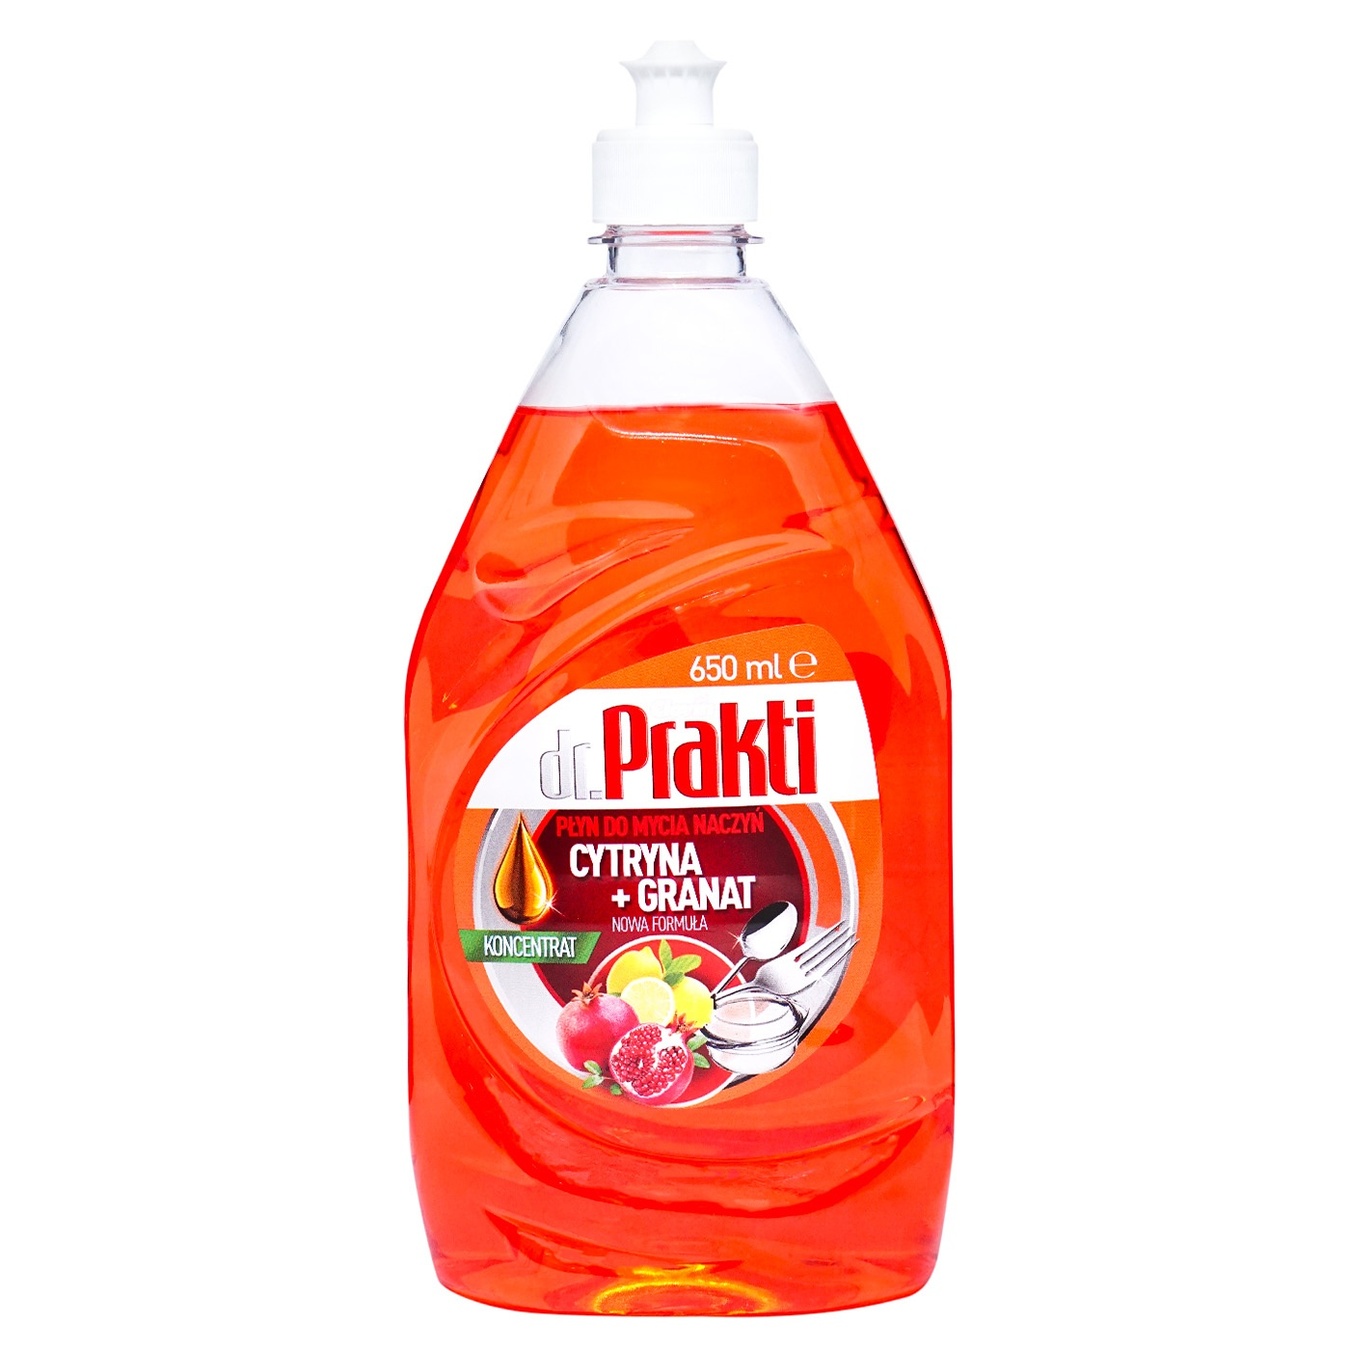 Detergent for washing dishes Dr. Prakti Lemon and pomegranate 650 ml